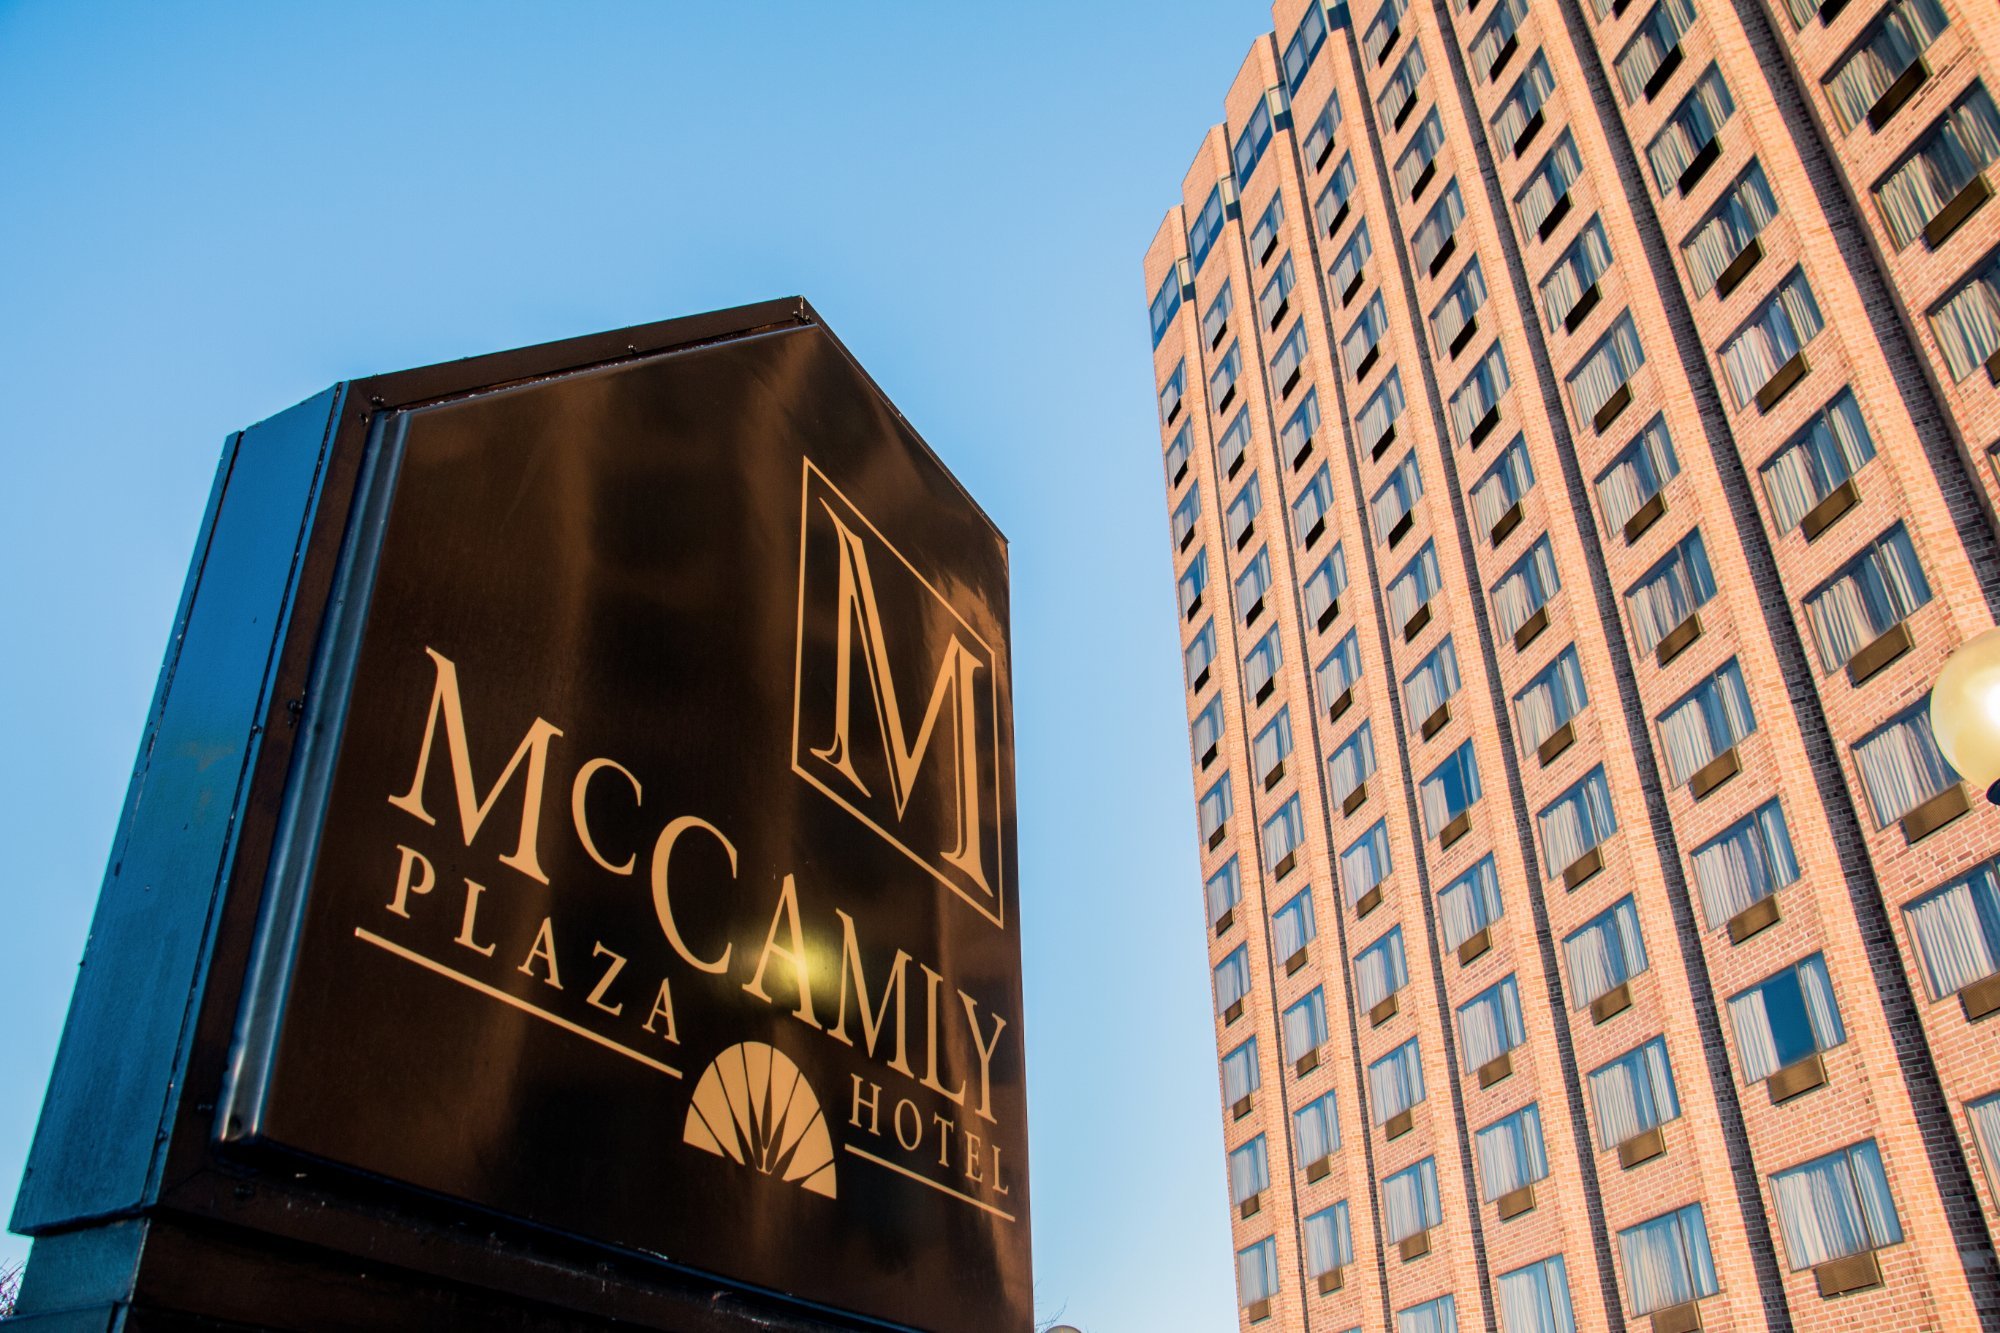 Photo of McCamly Plaza Hotel, Battle Creek, MI